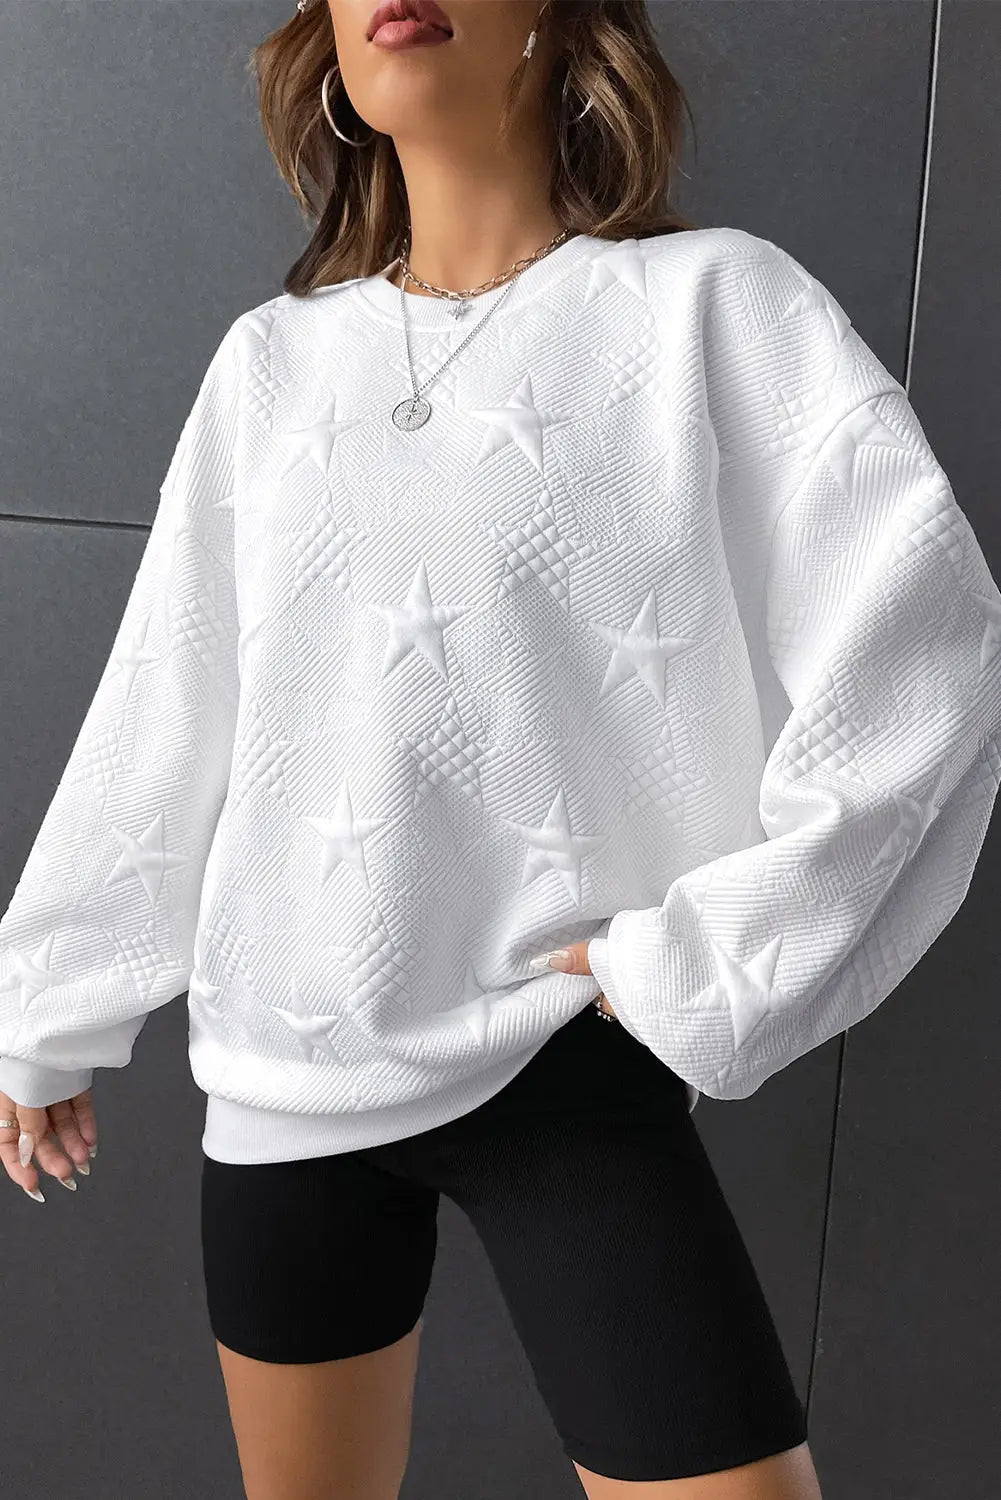 Peach blossom star embossed textured drop shoulder sweatshirt - sweatshirts & hoodies